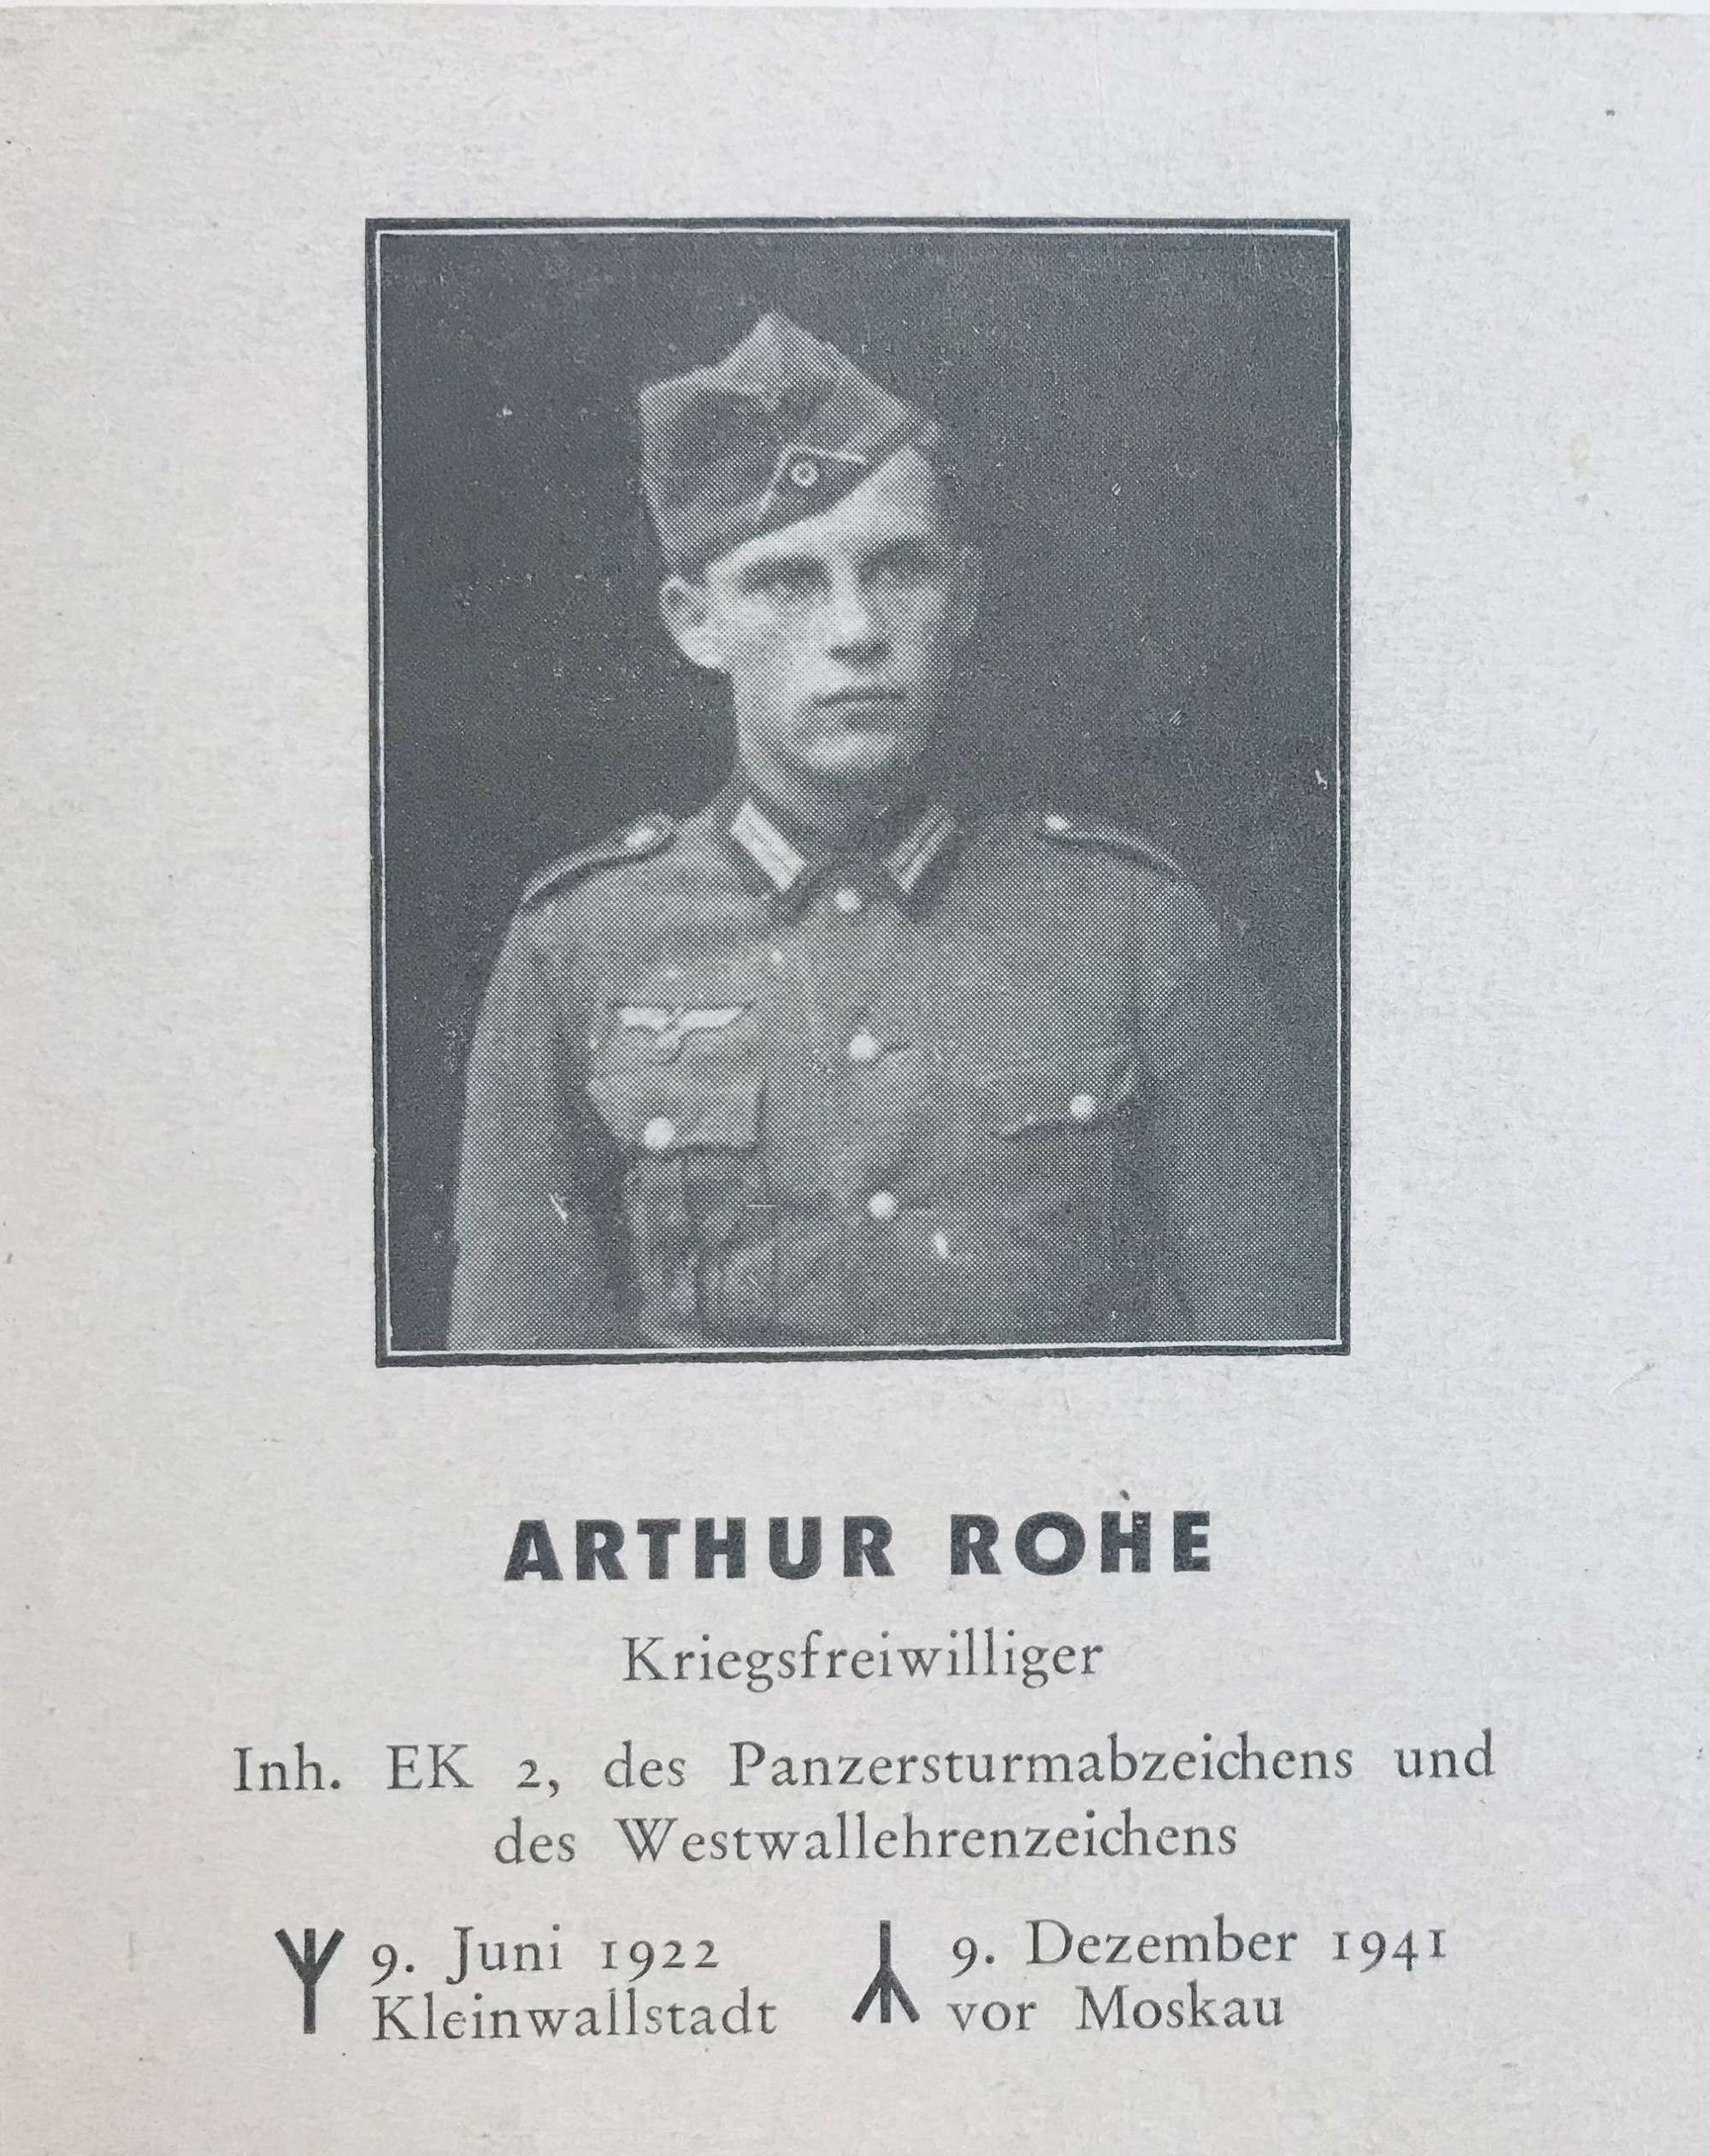 Memorial card for Arthur Rohe KIA 9/12/41 near Moscow